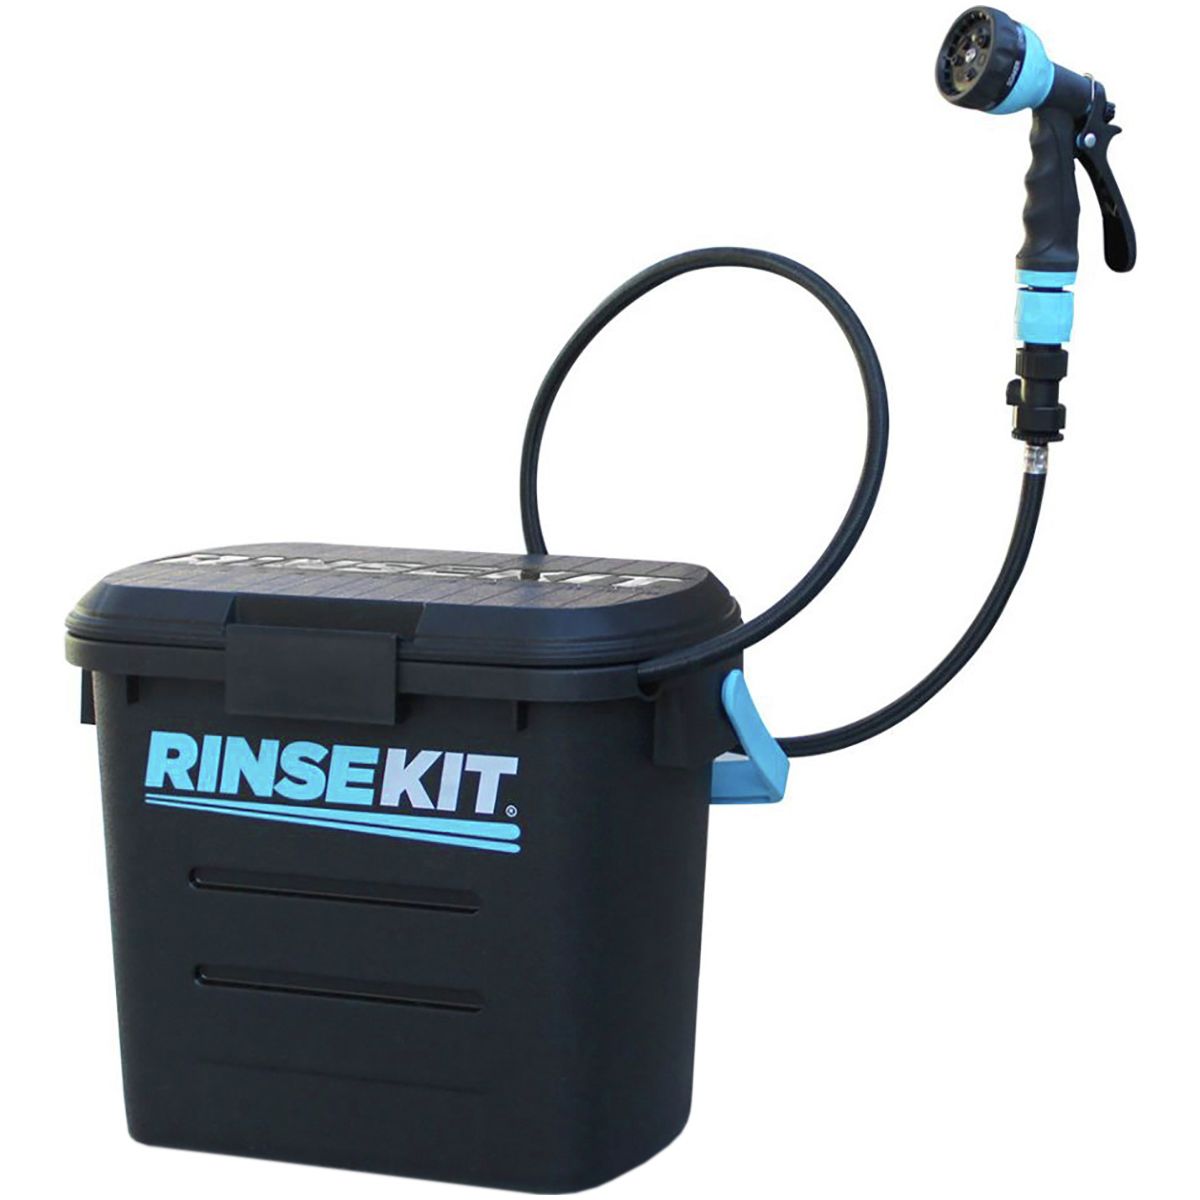 RinseKit Pressurized Portable Shower Hose